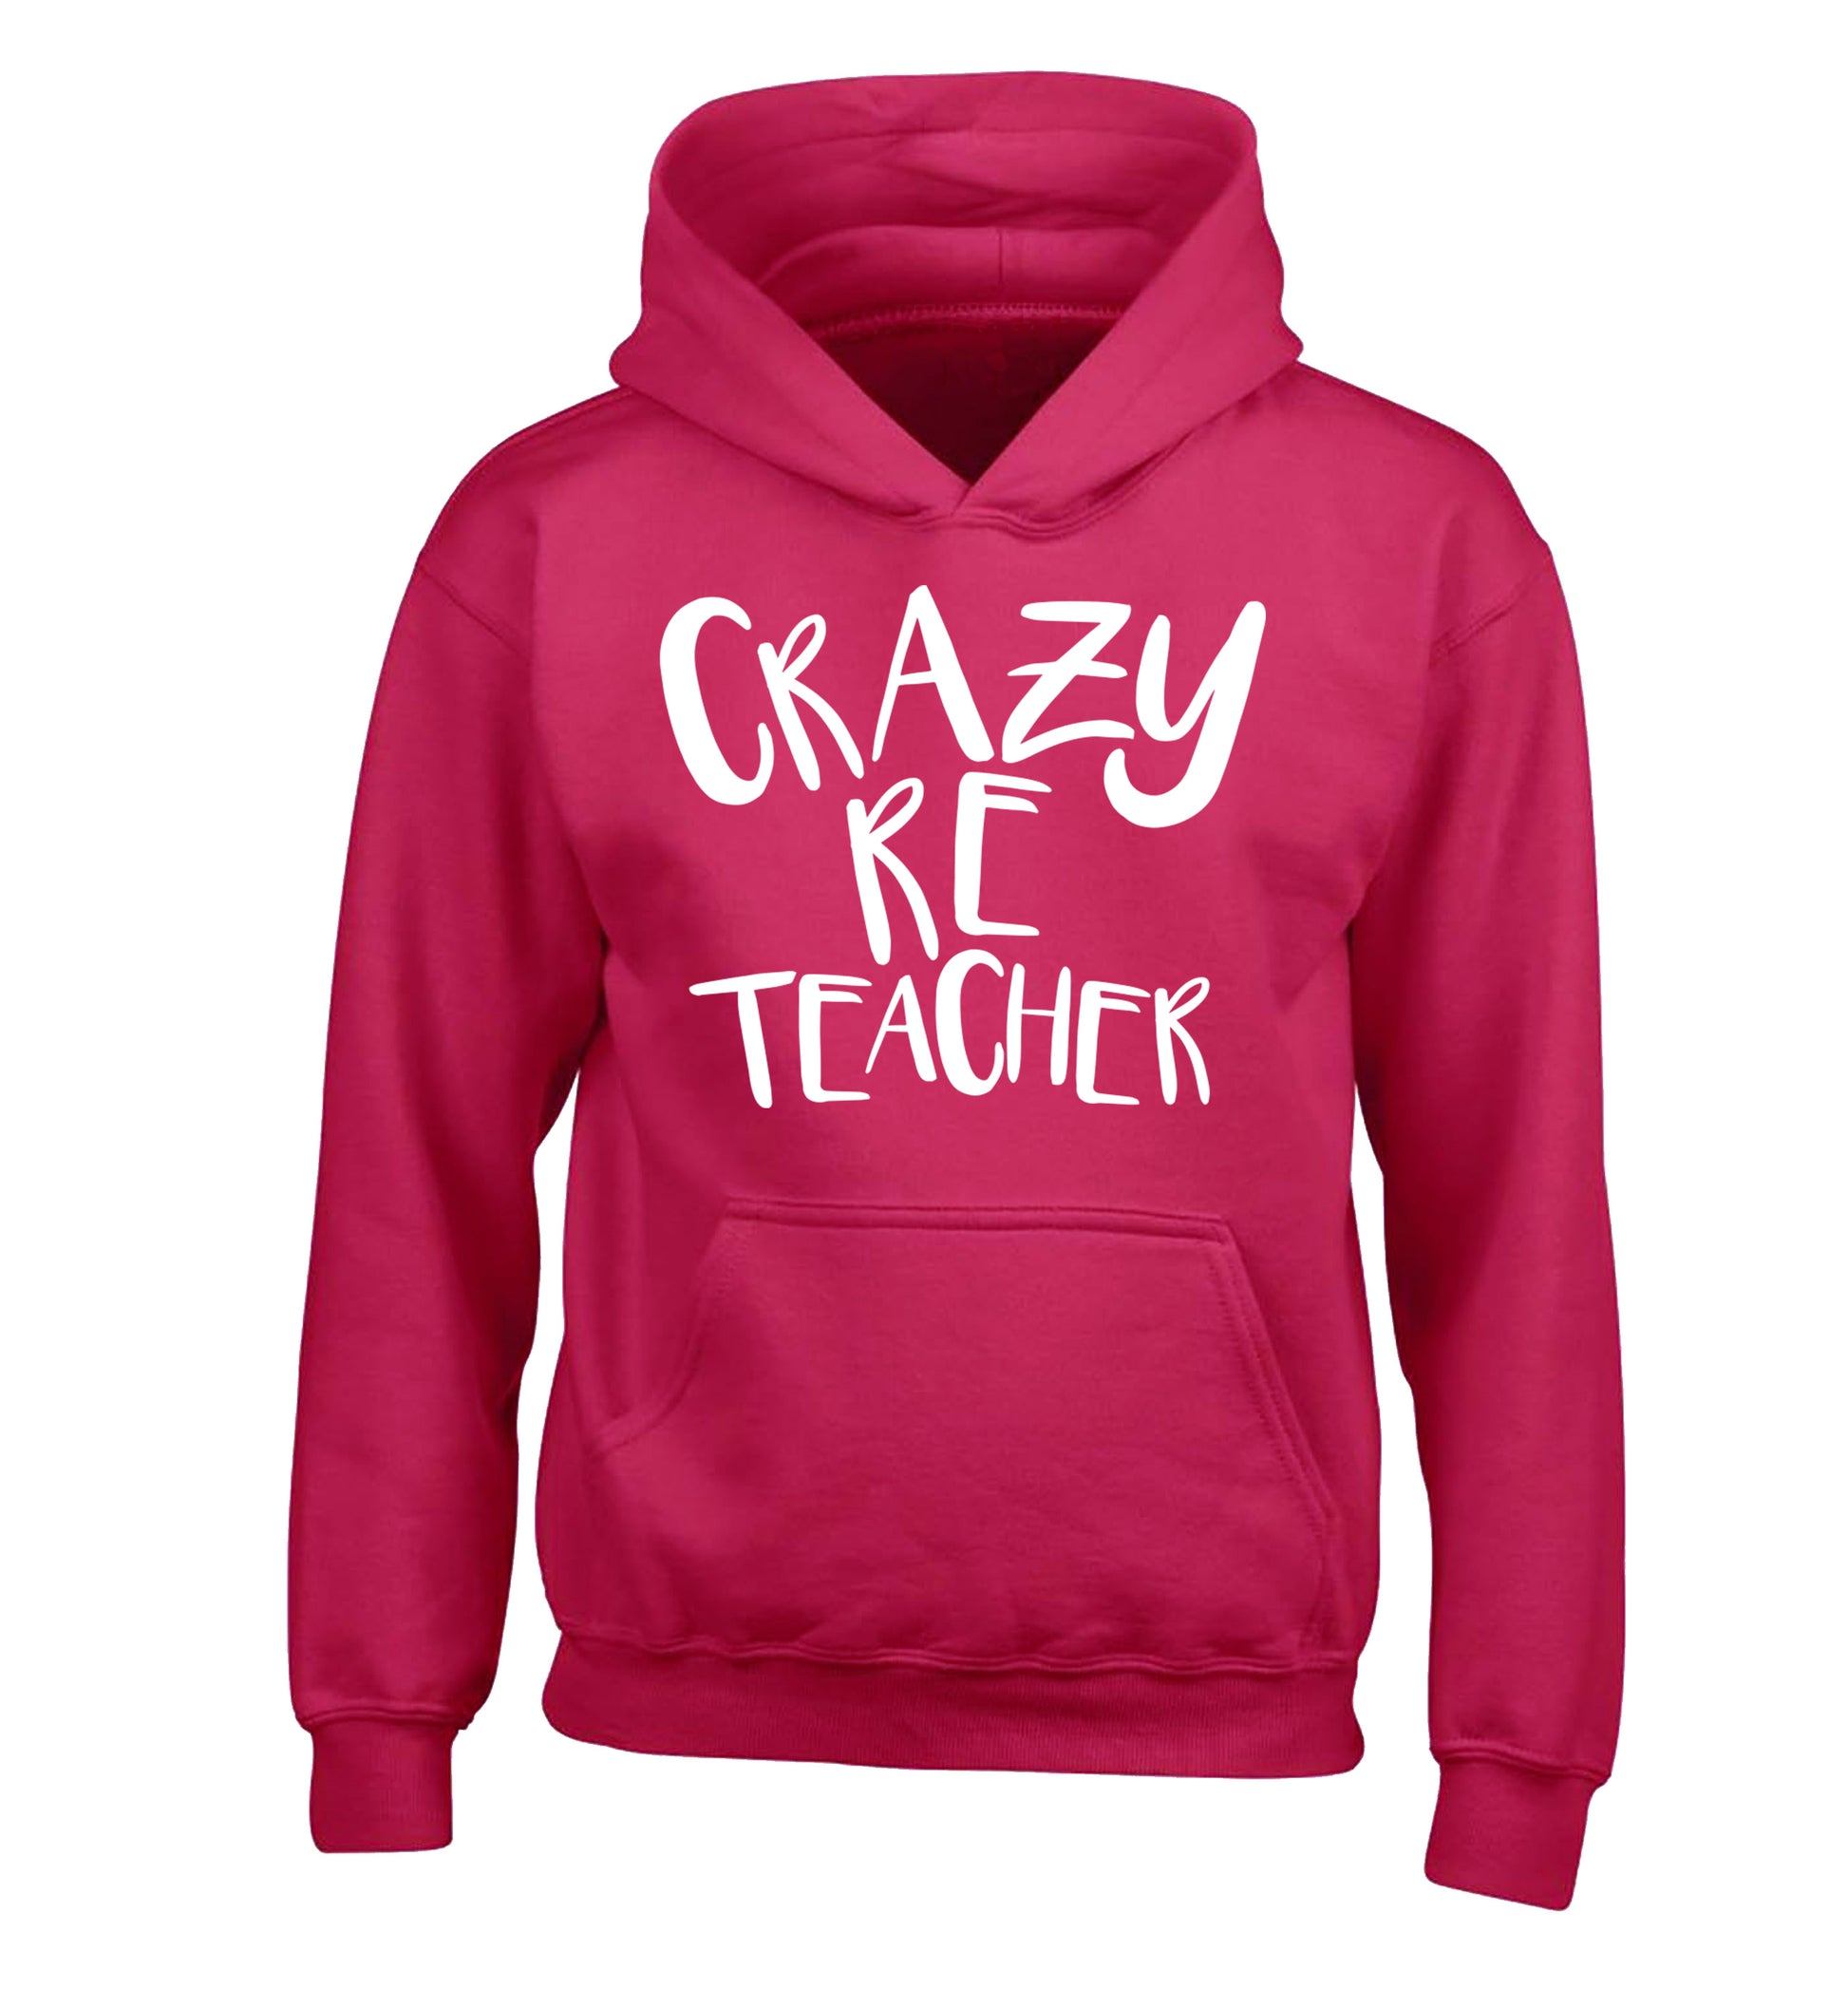 Crazy RE teacher children's pink hoodie 12-13 Years